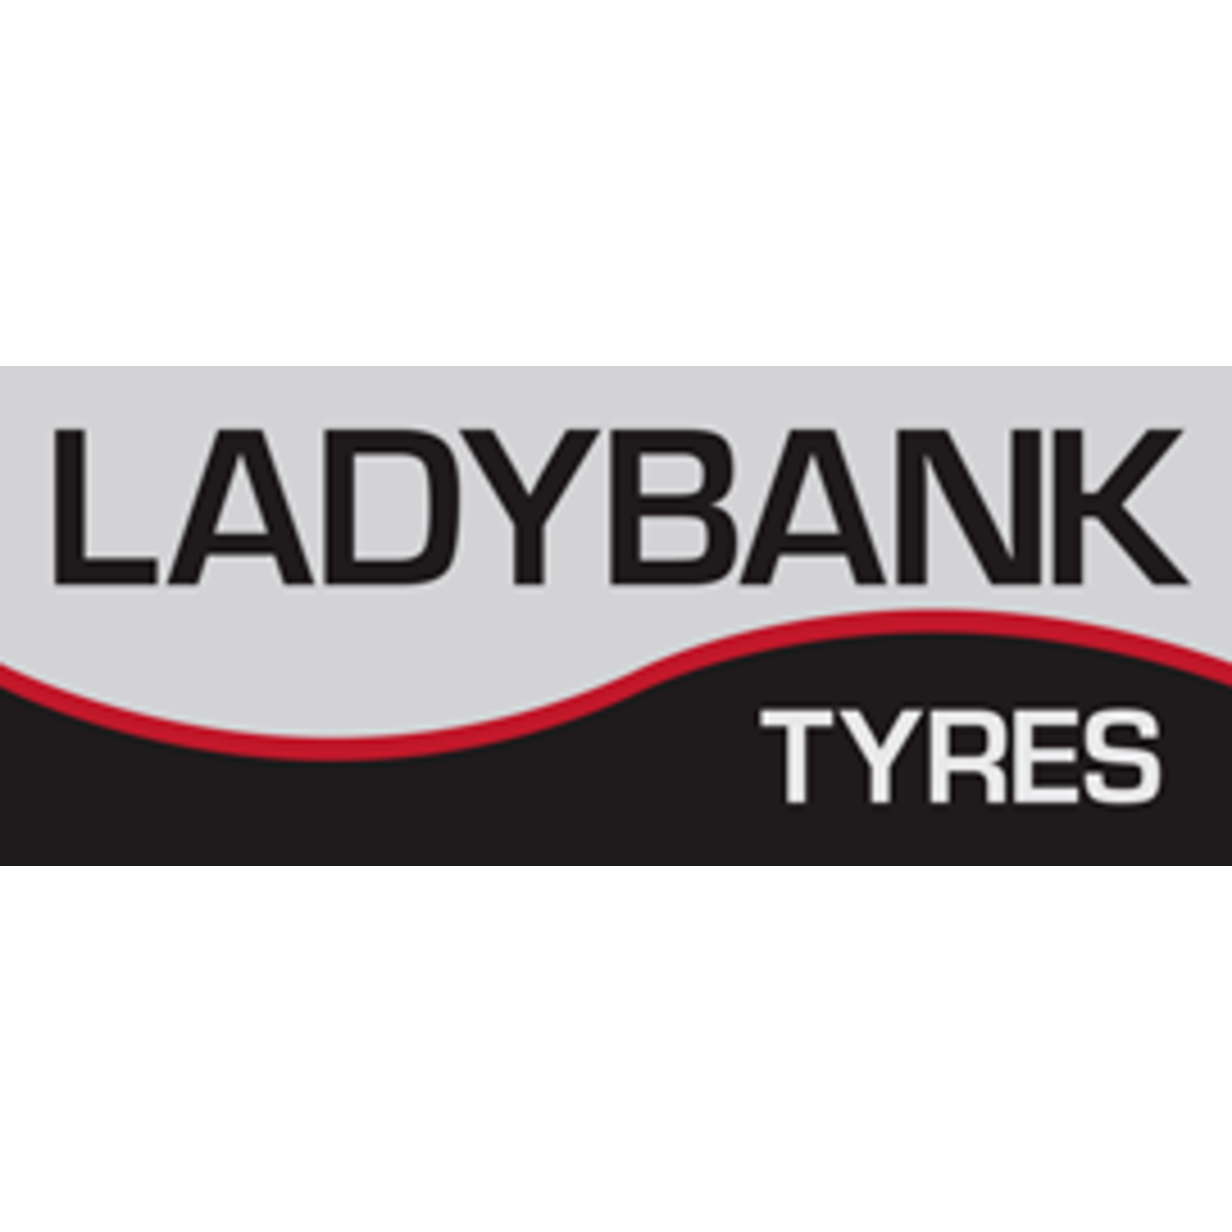 Ladybank Tyres LTD - Ladybank, Fife KY15 7JS - 01337 830932 | ShowMeLocal.com